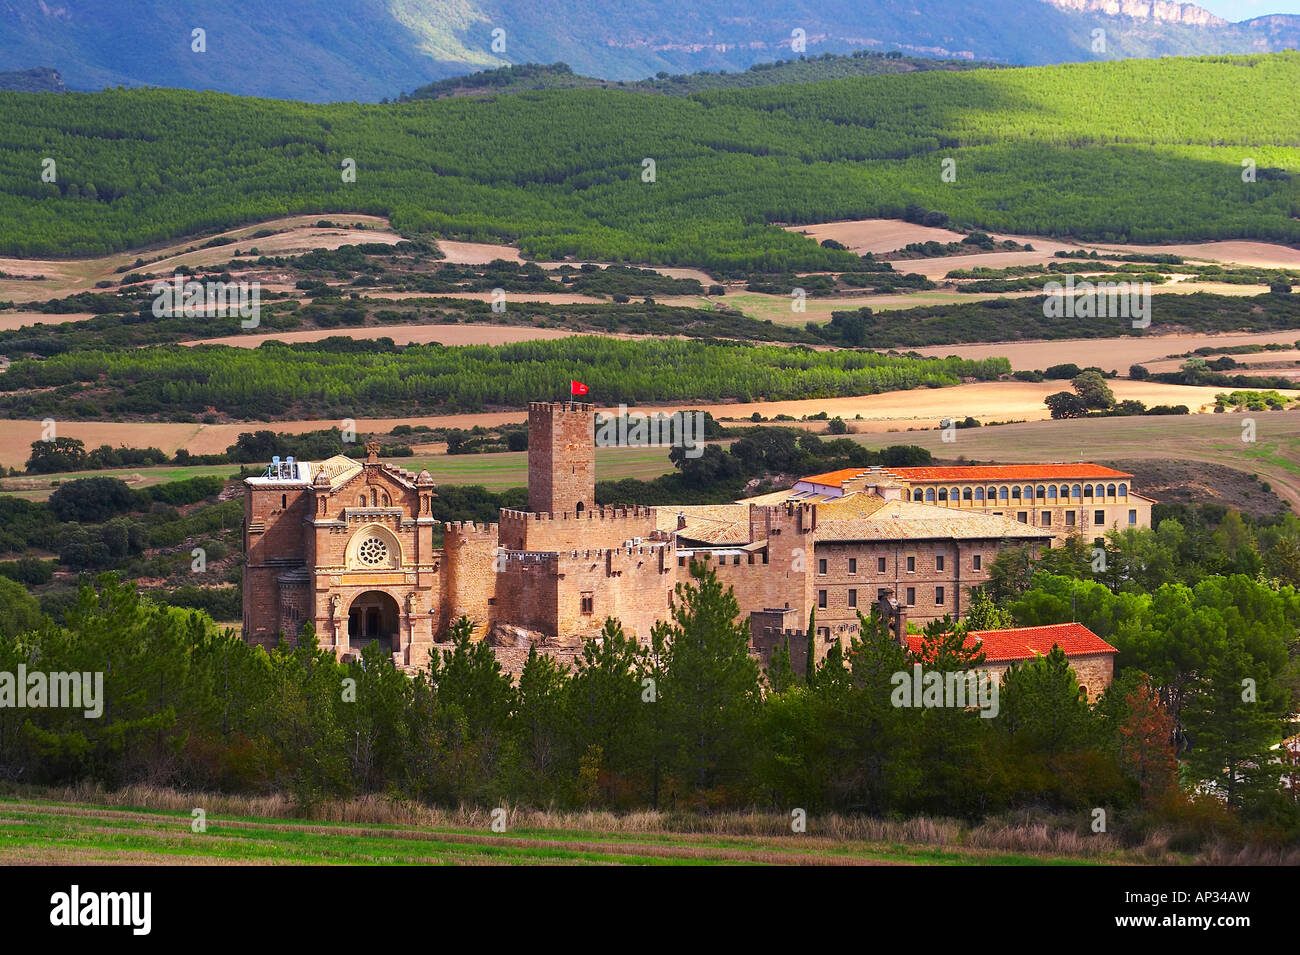 Landscape and mountains with castle, Castillo de Javier, Francisco Javier 1506, near Sangueesa, Navarra, Spain Stock Photo